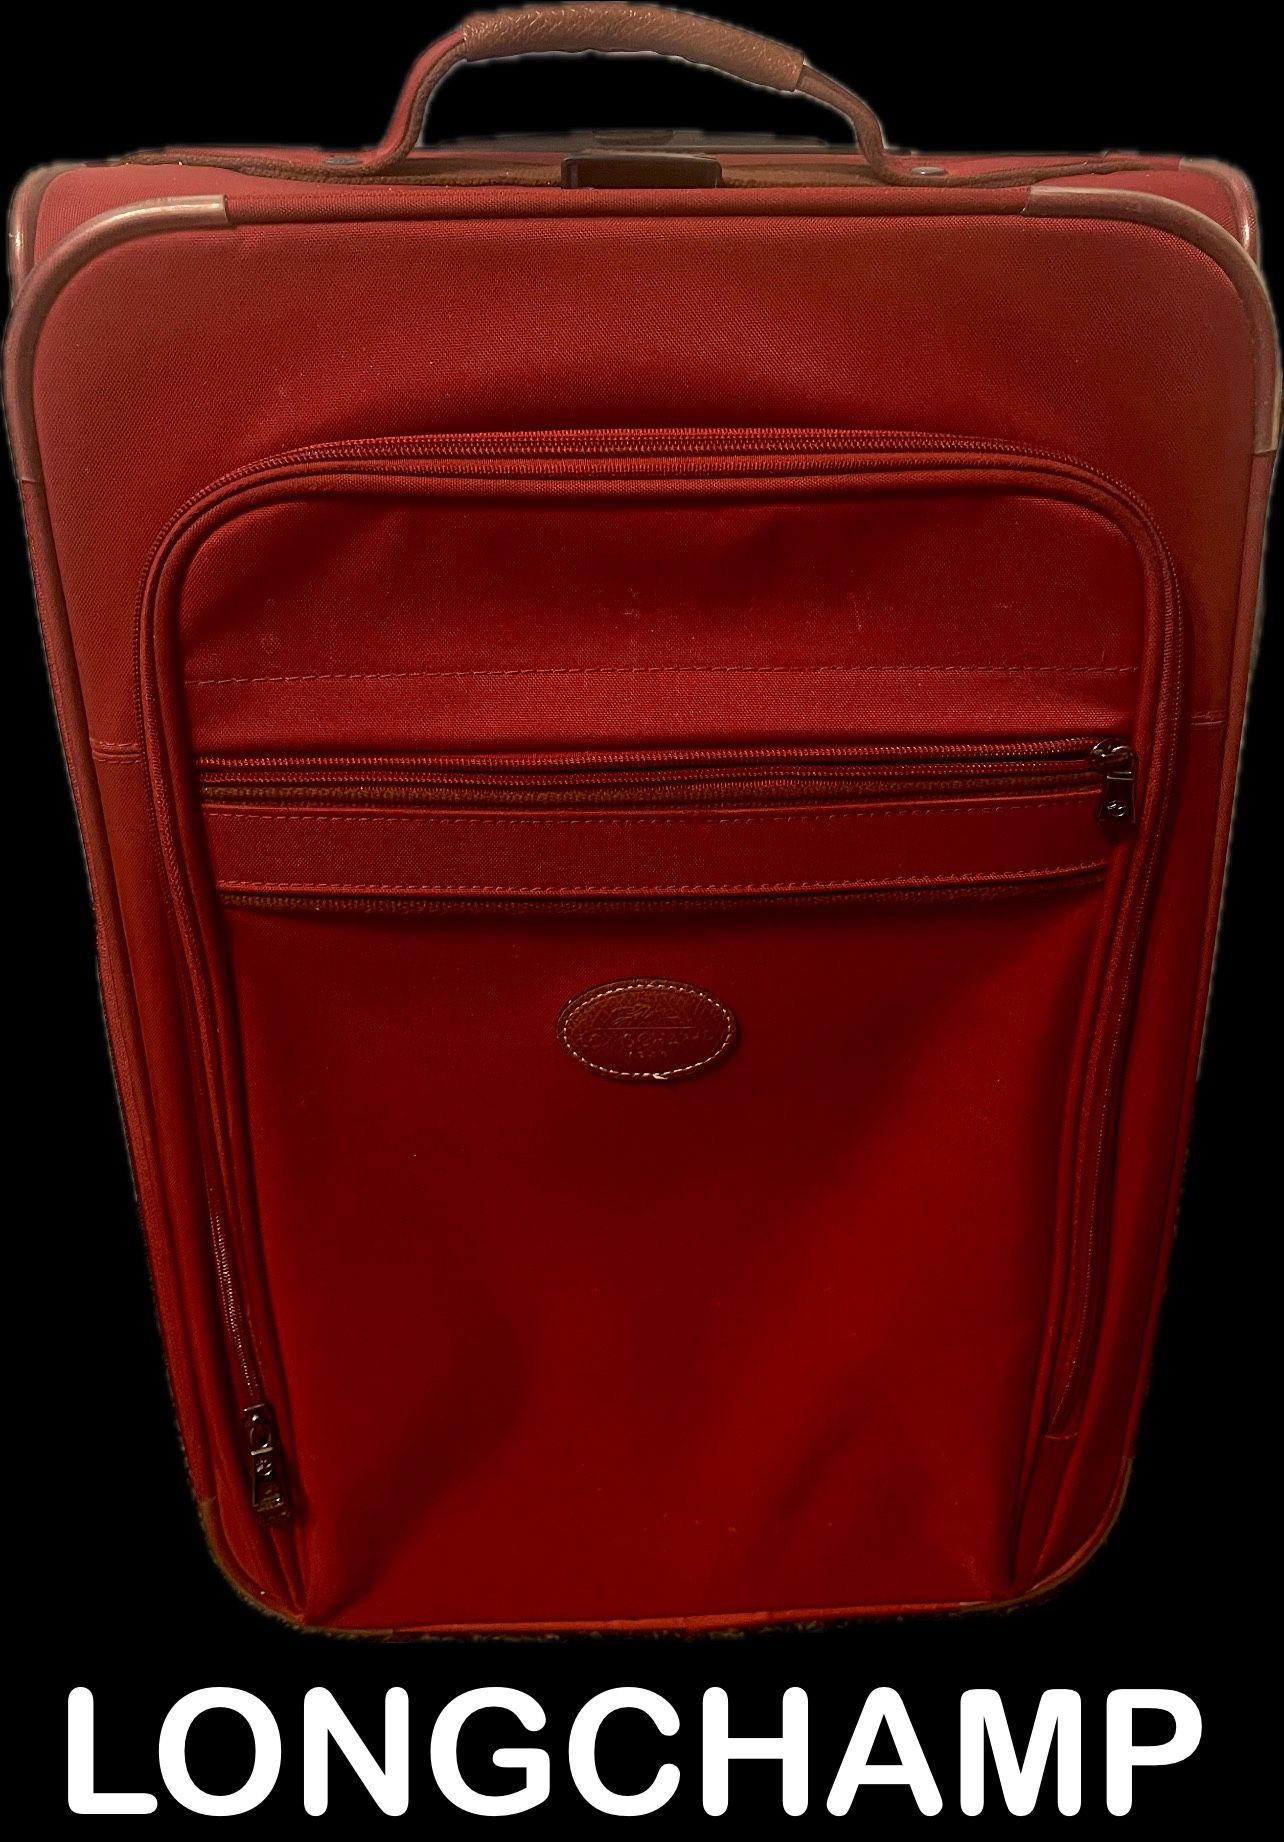 Longchamp Rolling suitcase